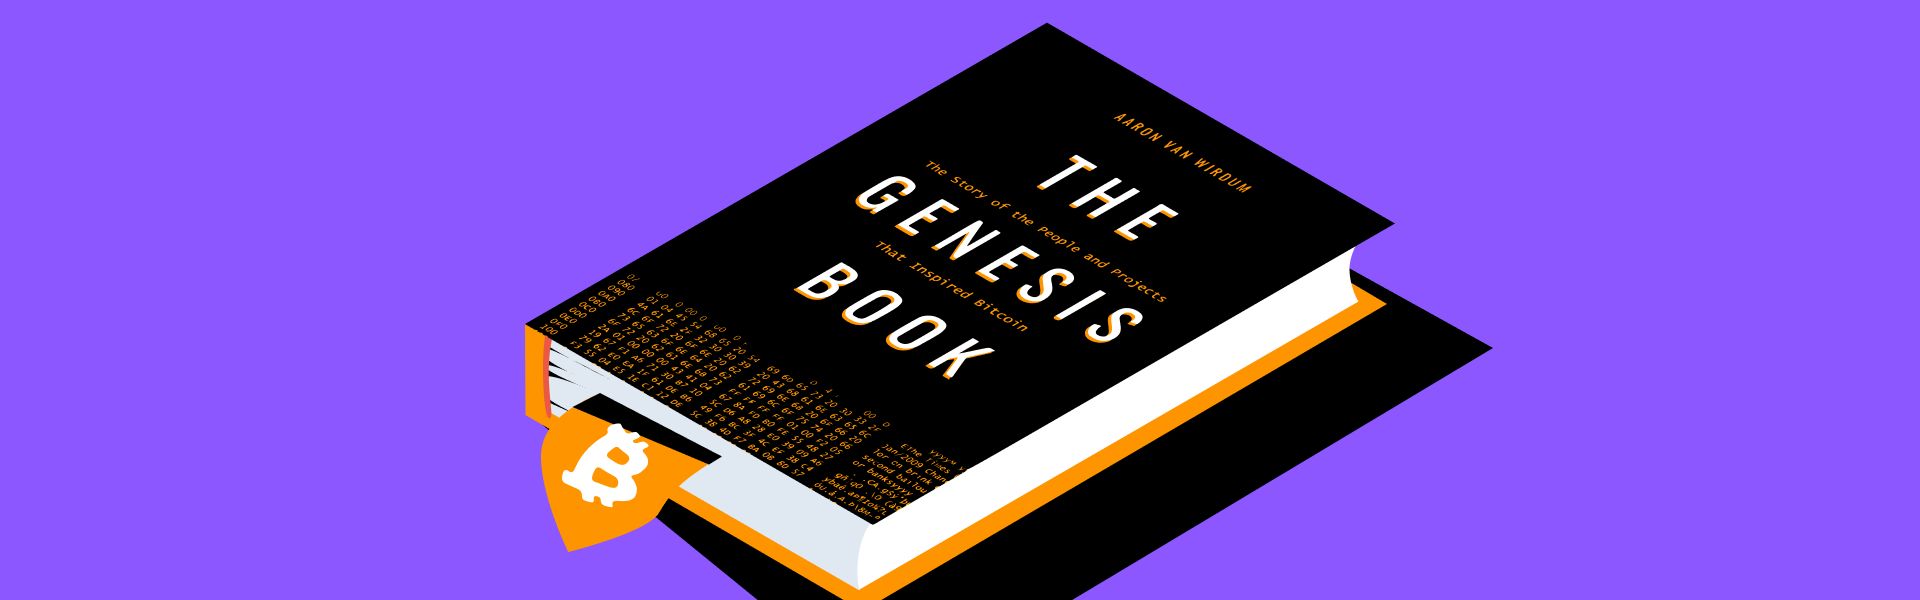 The Genesis Book: про що нова книга Аарона ван Вірдума